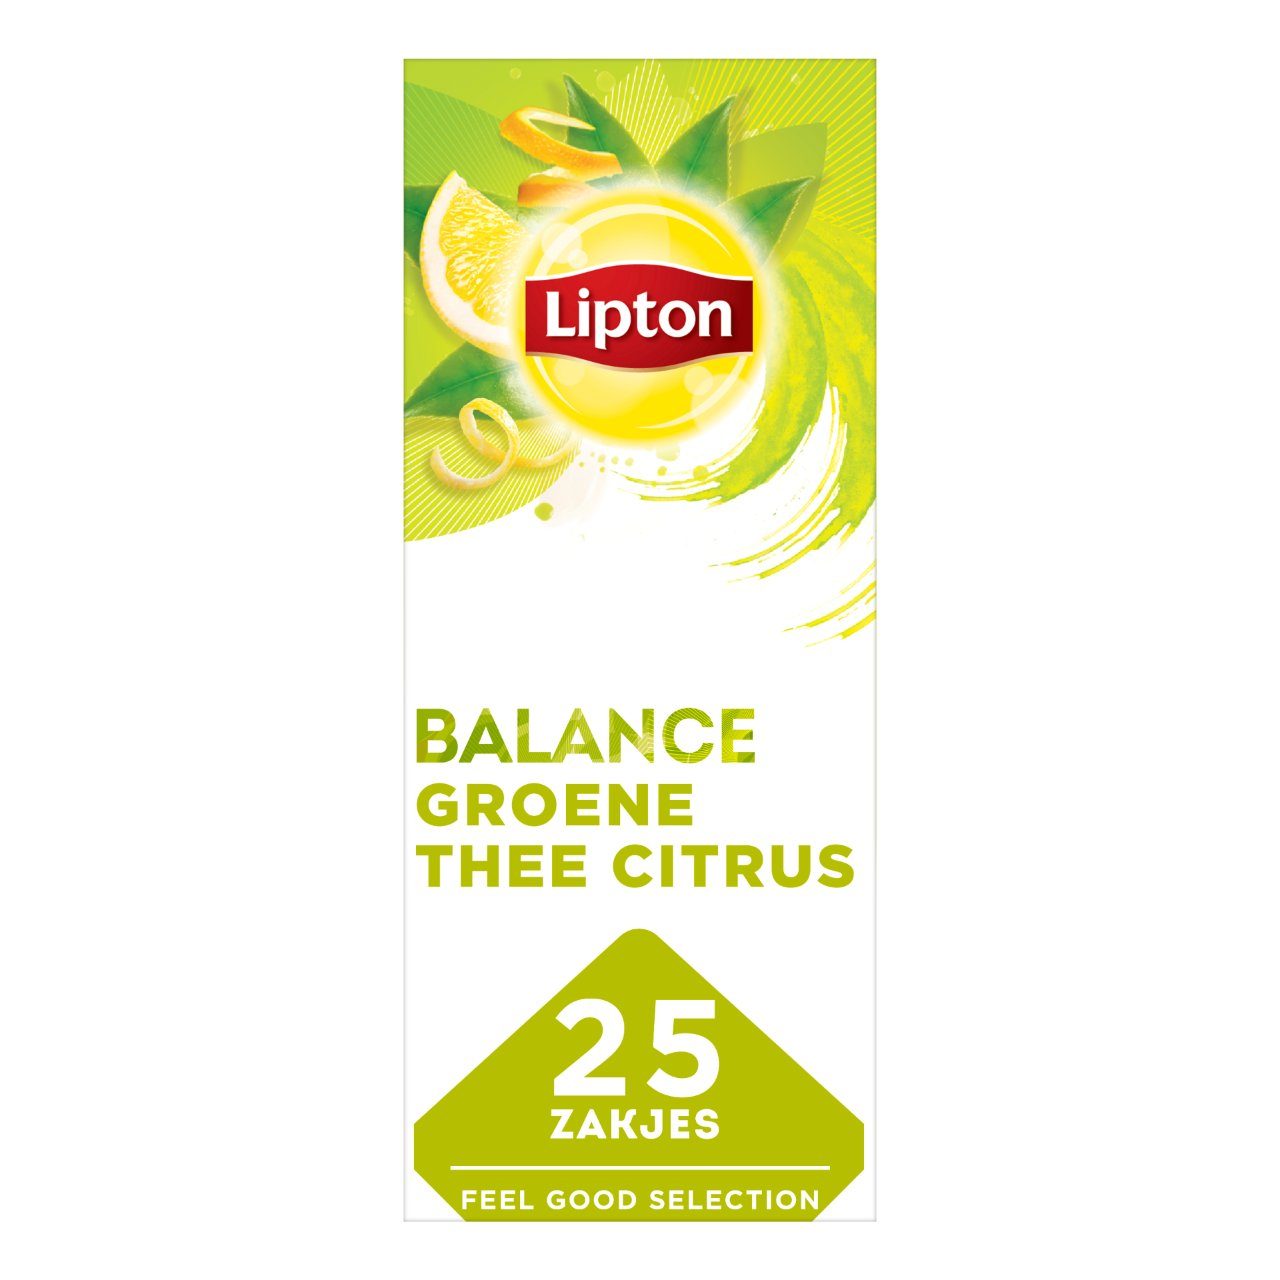 Groene thee citrus